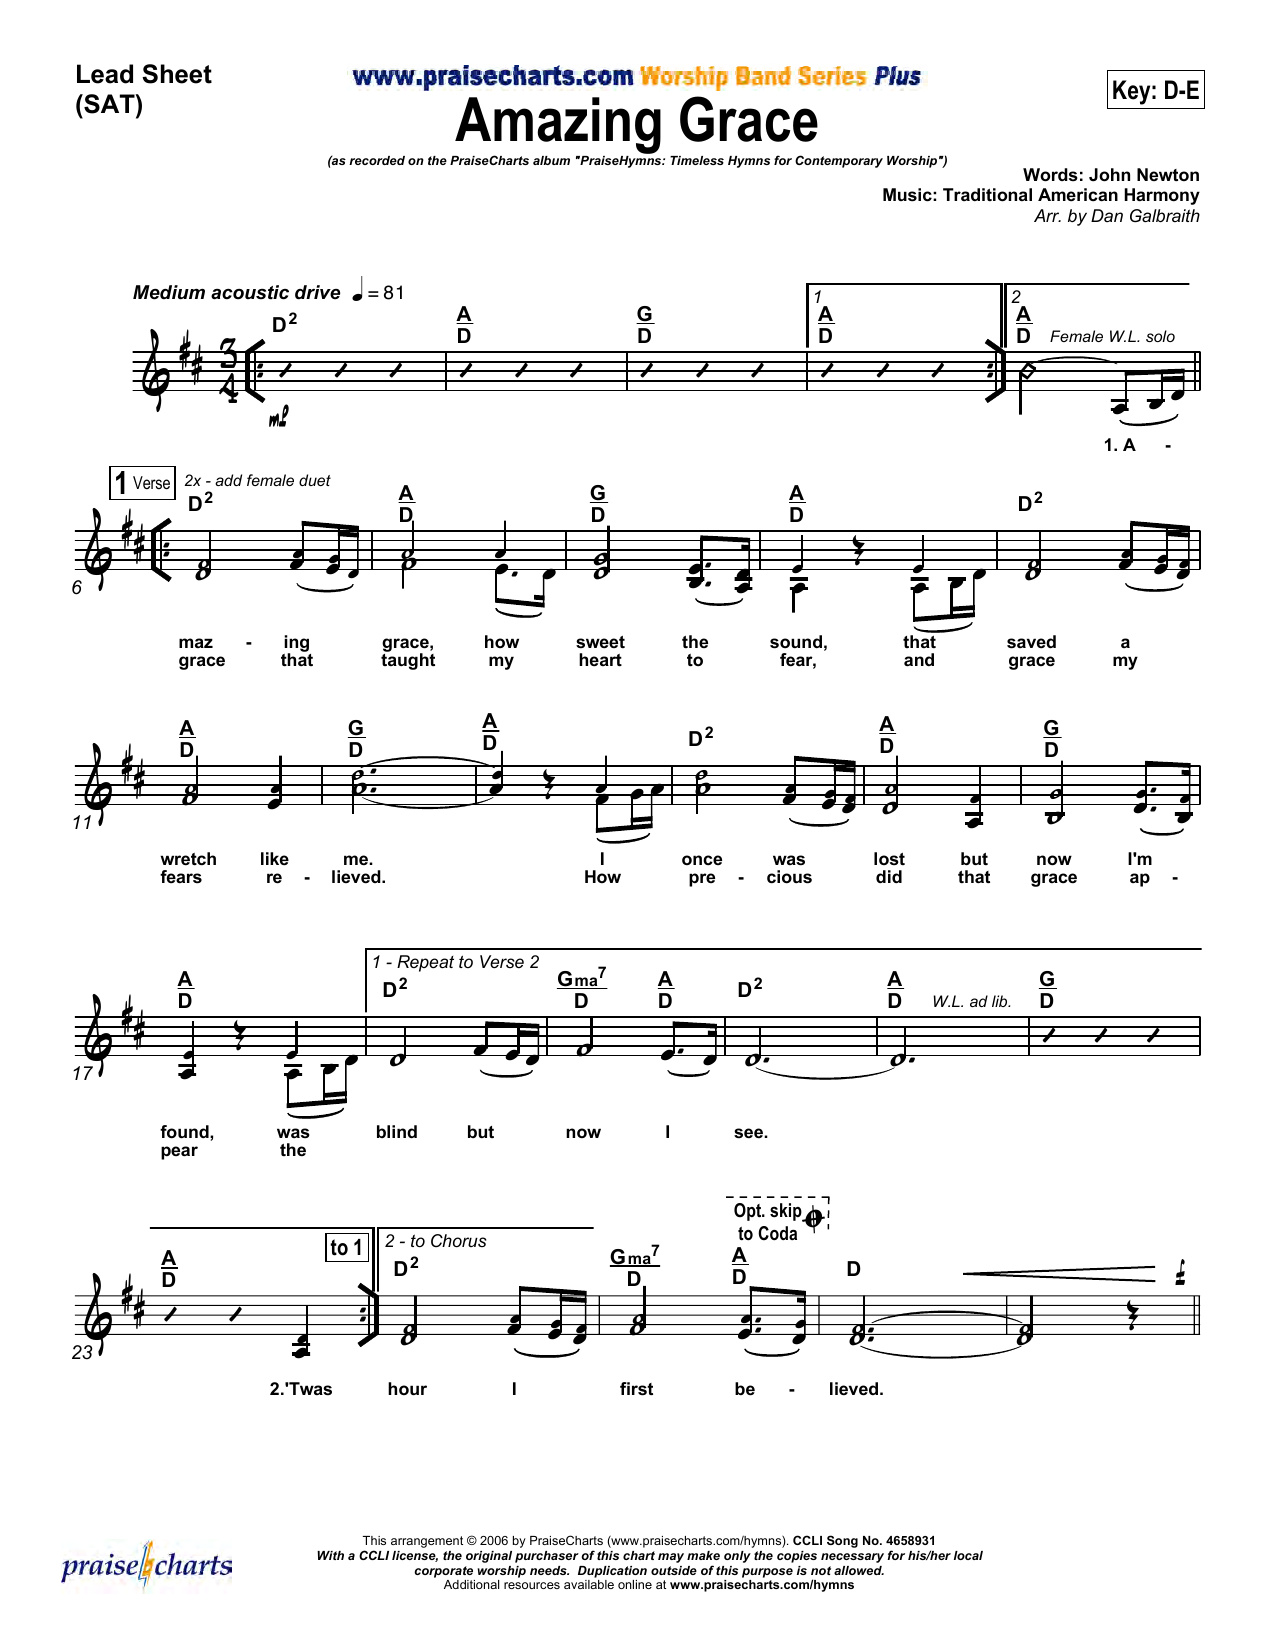 Dan Galbraith Amazing Grace Sheet Music Notes & Chords for Lead Sheet / Fake Book - Download or Print PDF